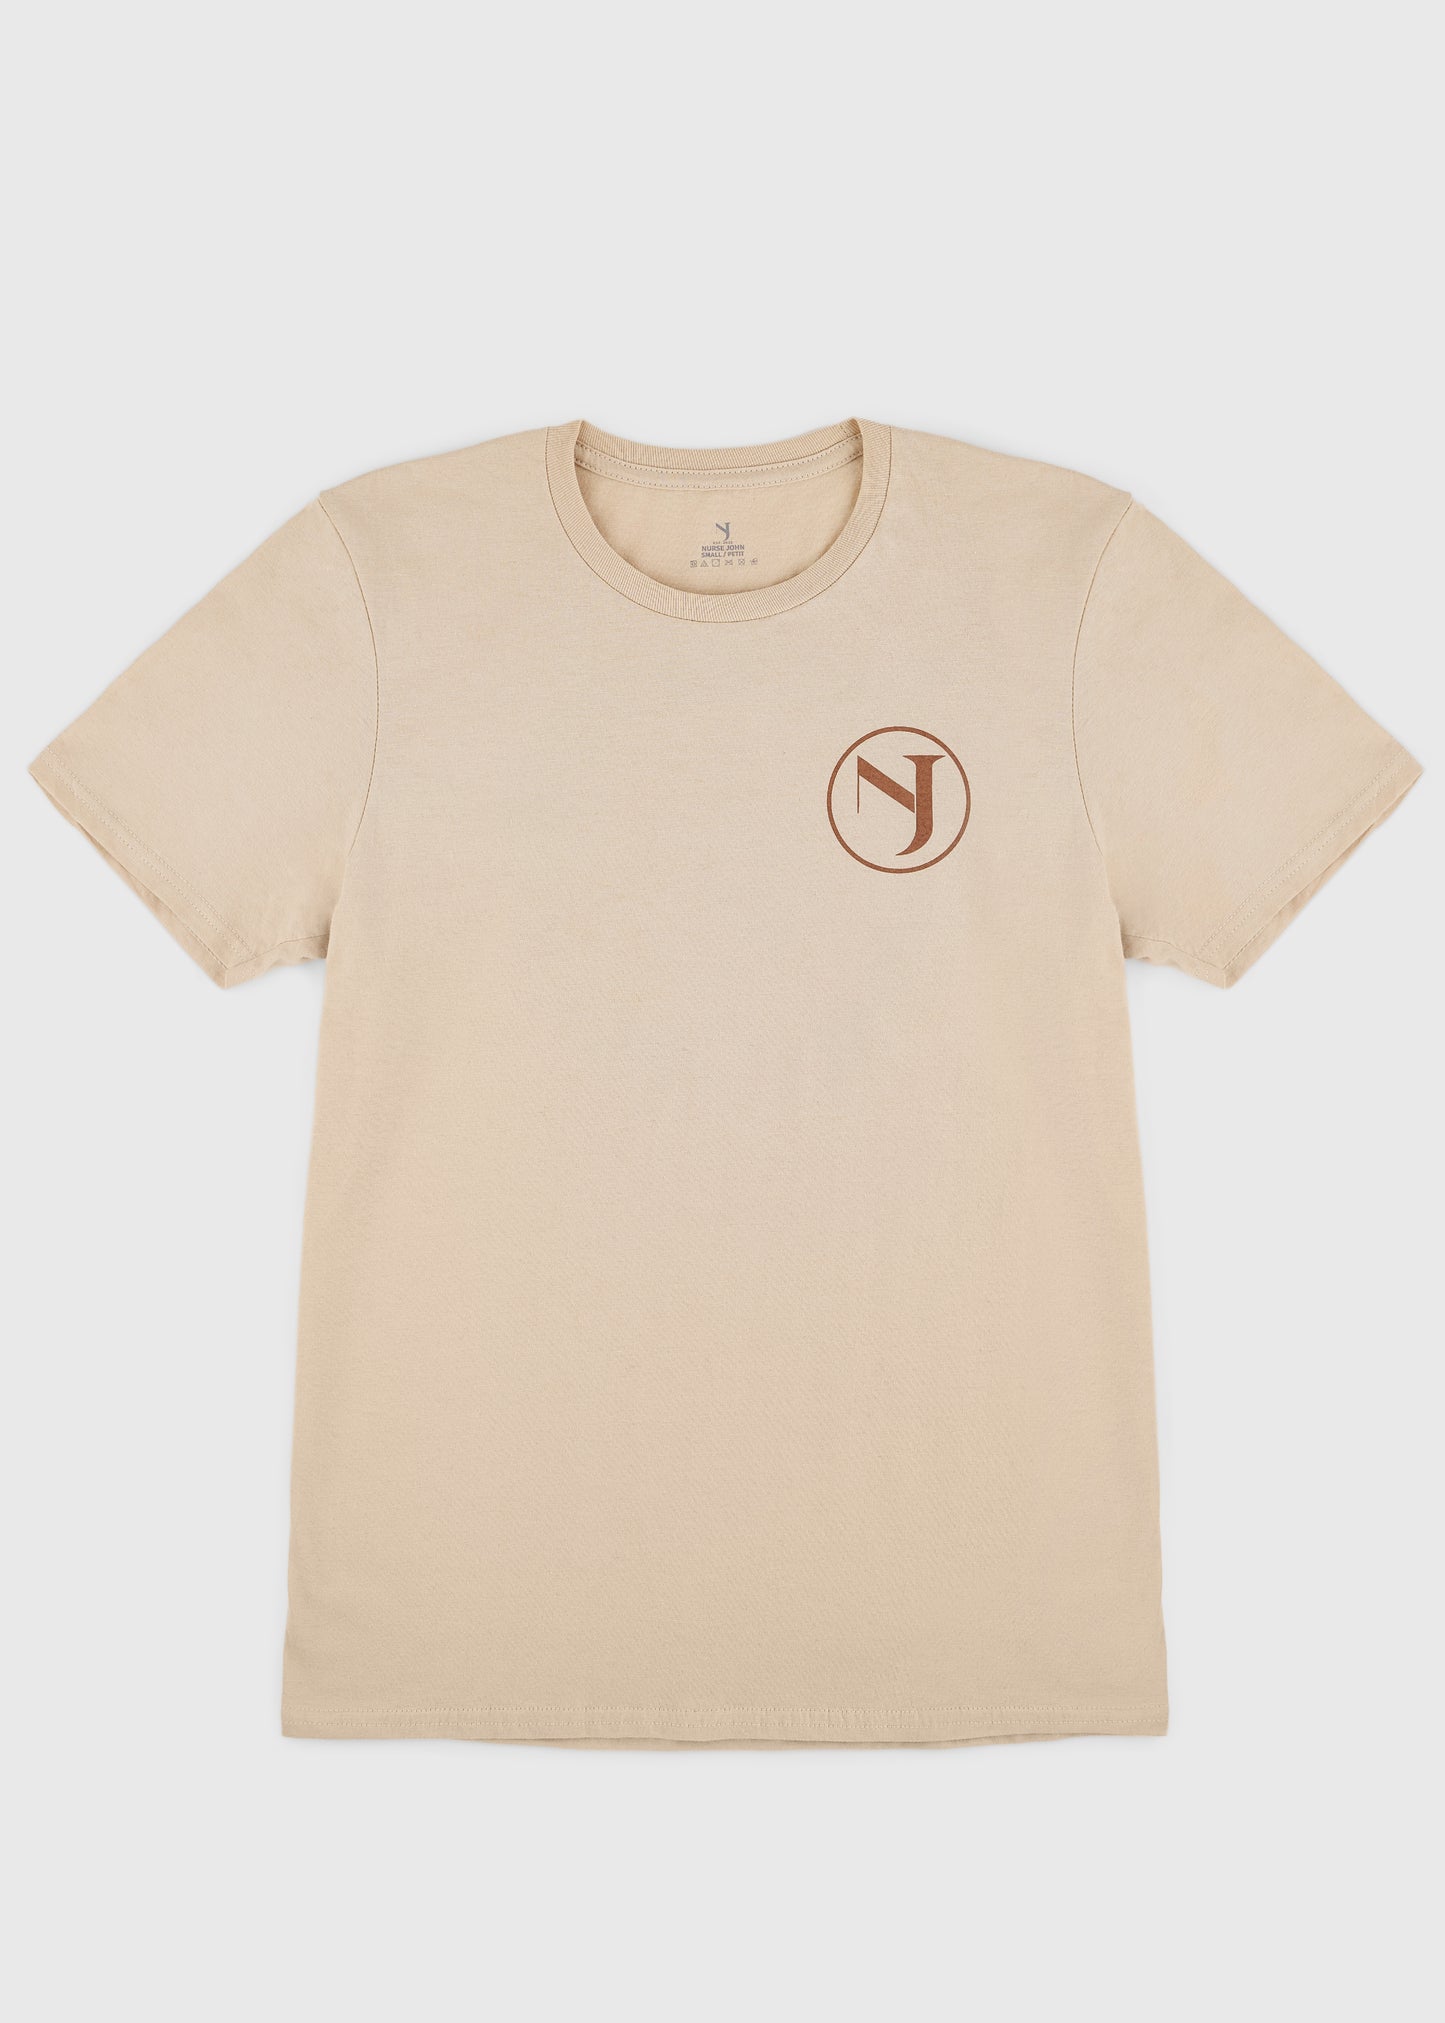 The Elizabeth Soft-Style T-Shirt